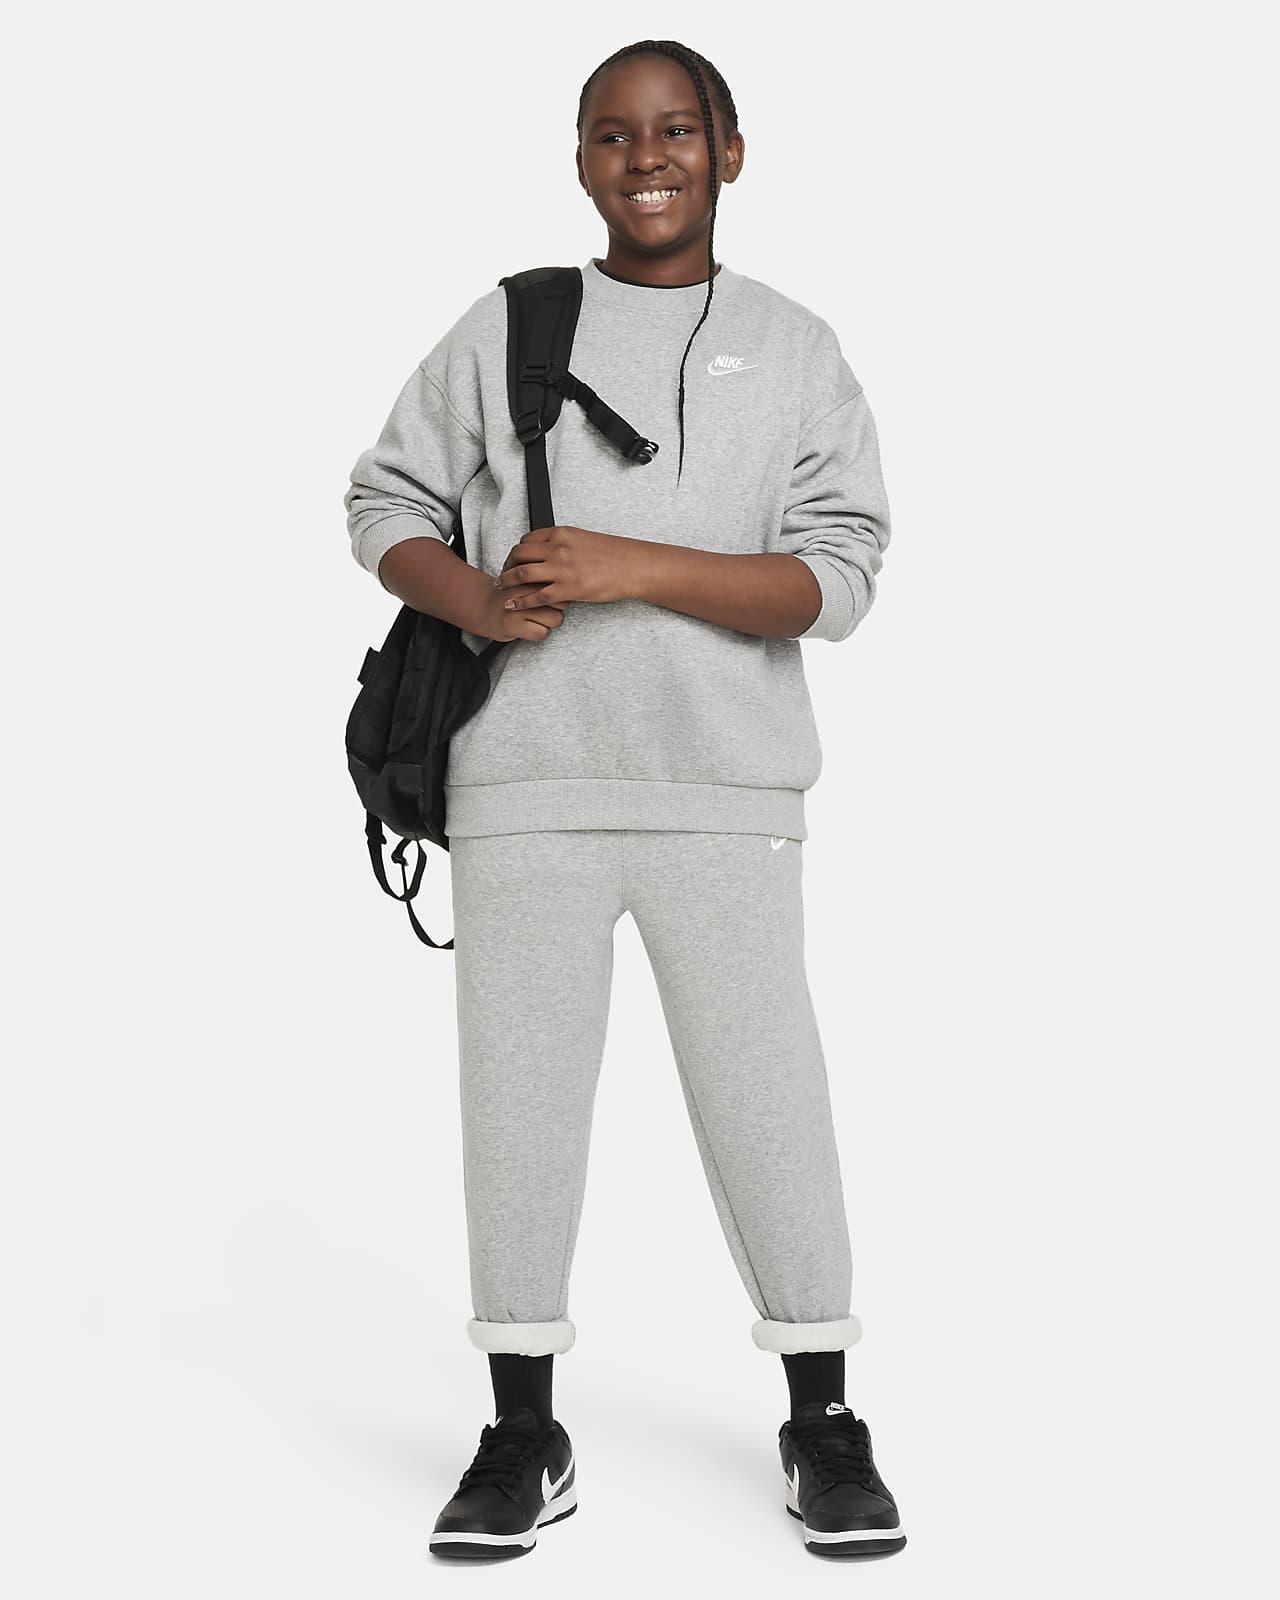 NIKE sweatpants Sportswear Club Grey for girls